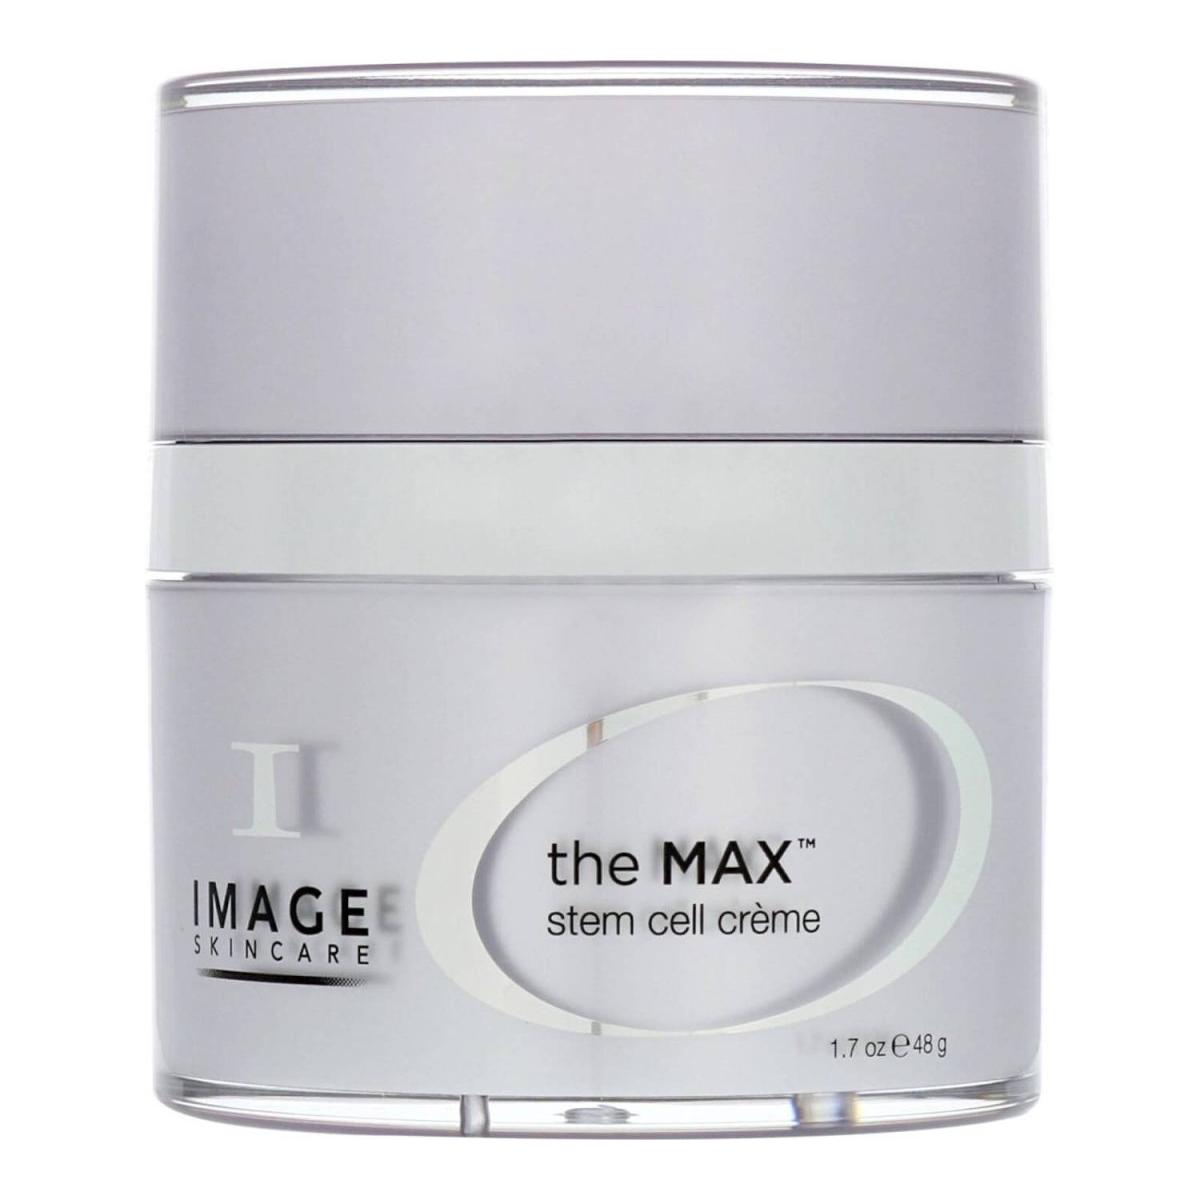 Image Skin Care Max Creme - 50ml - Glam Global UK